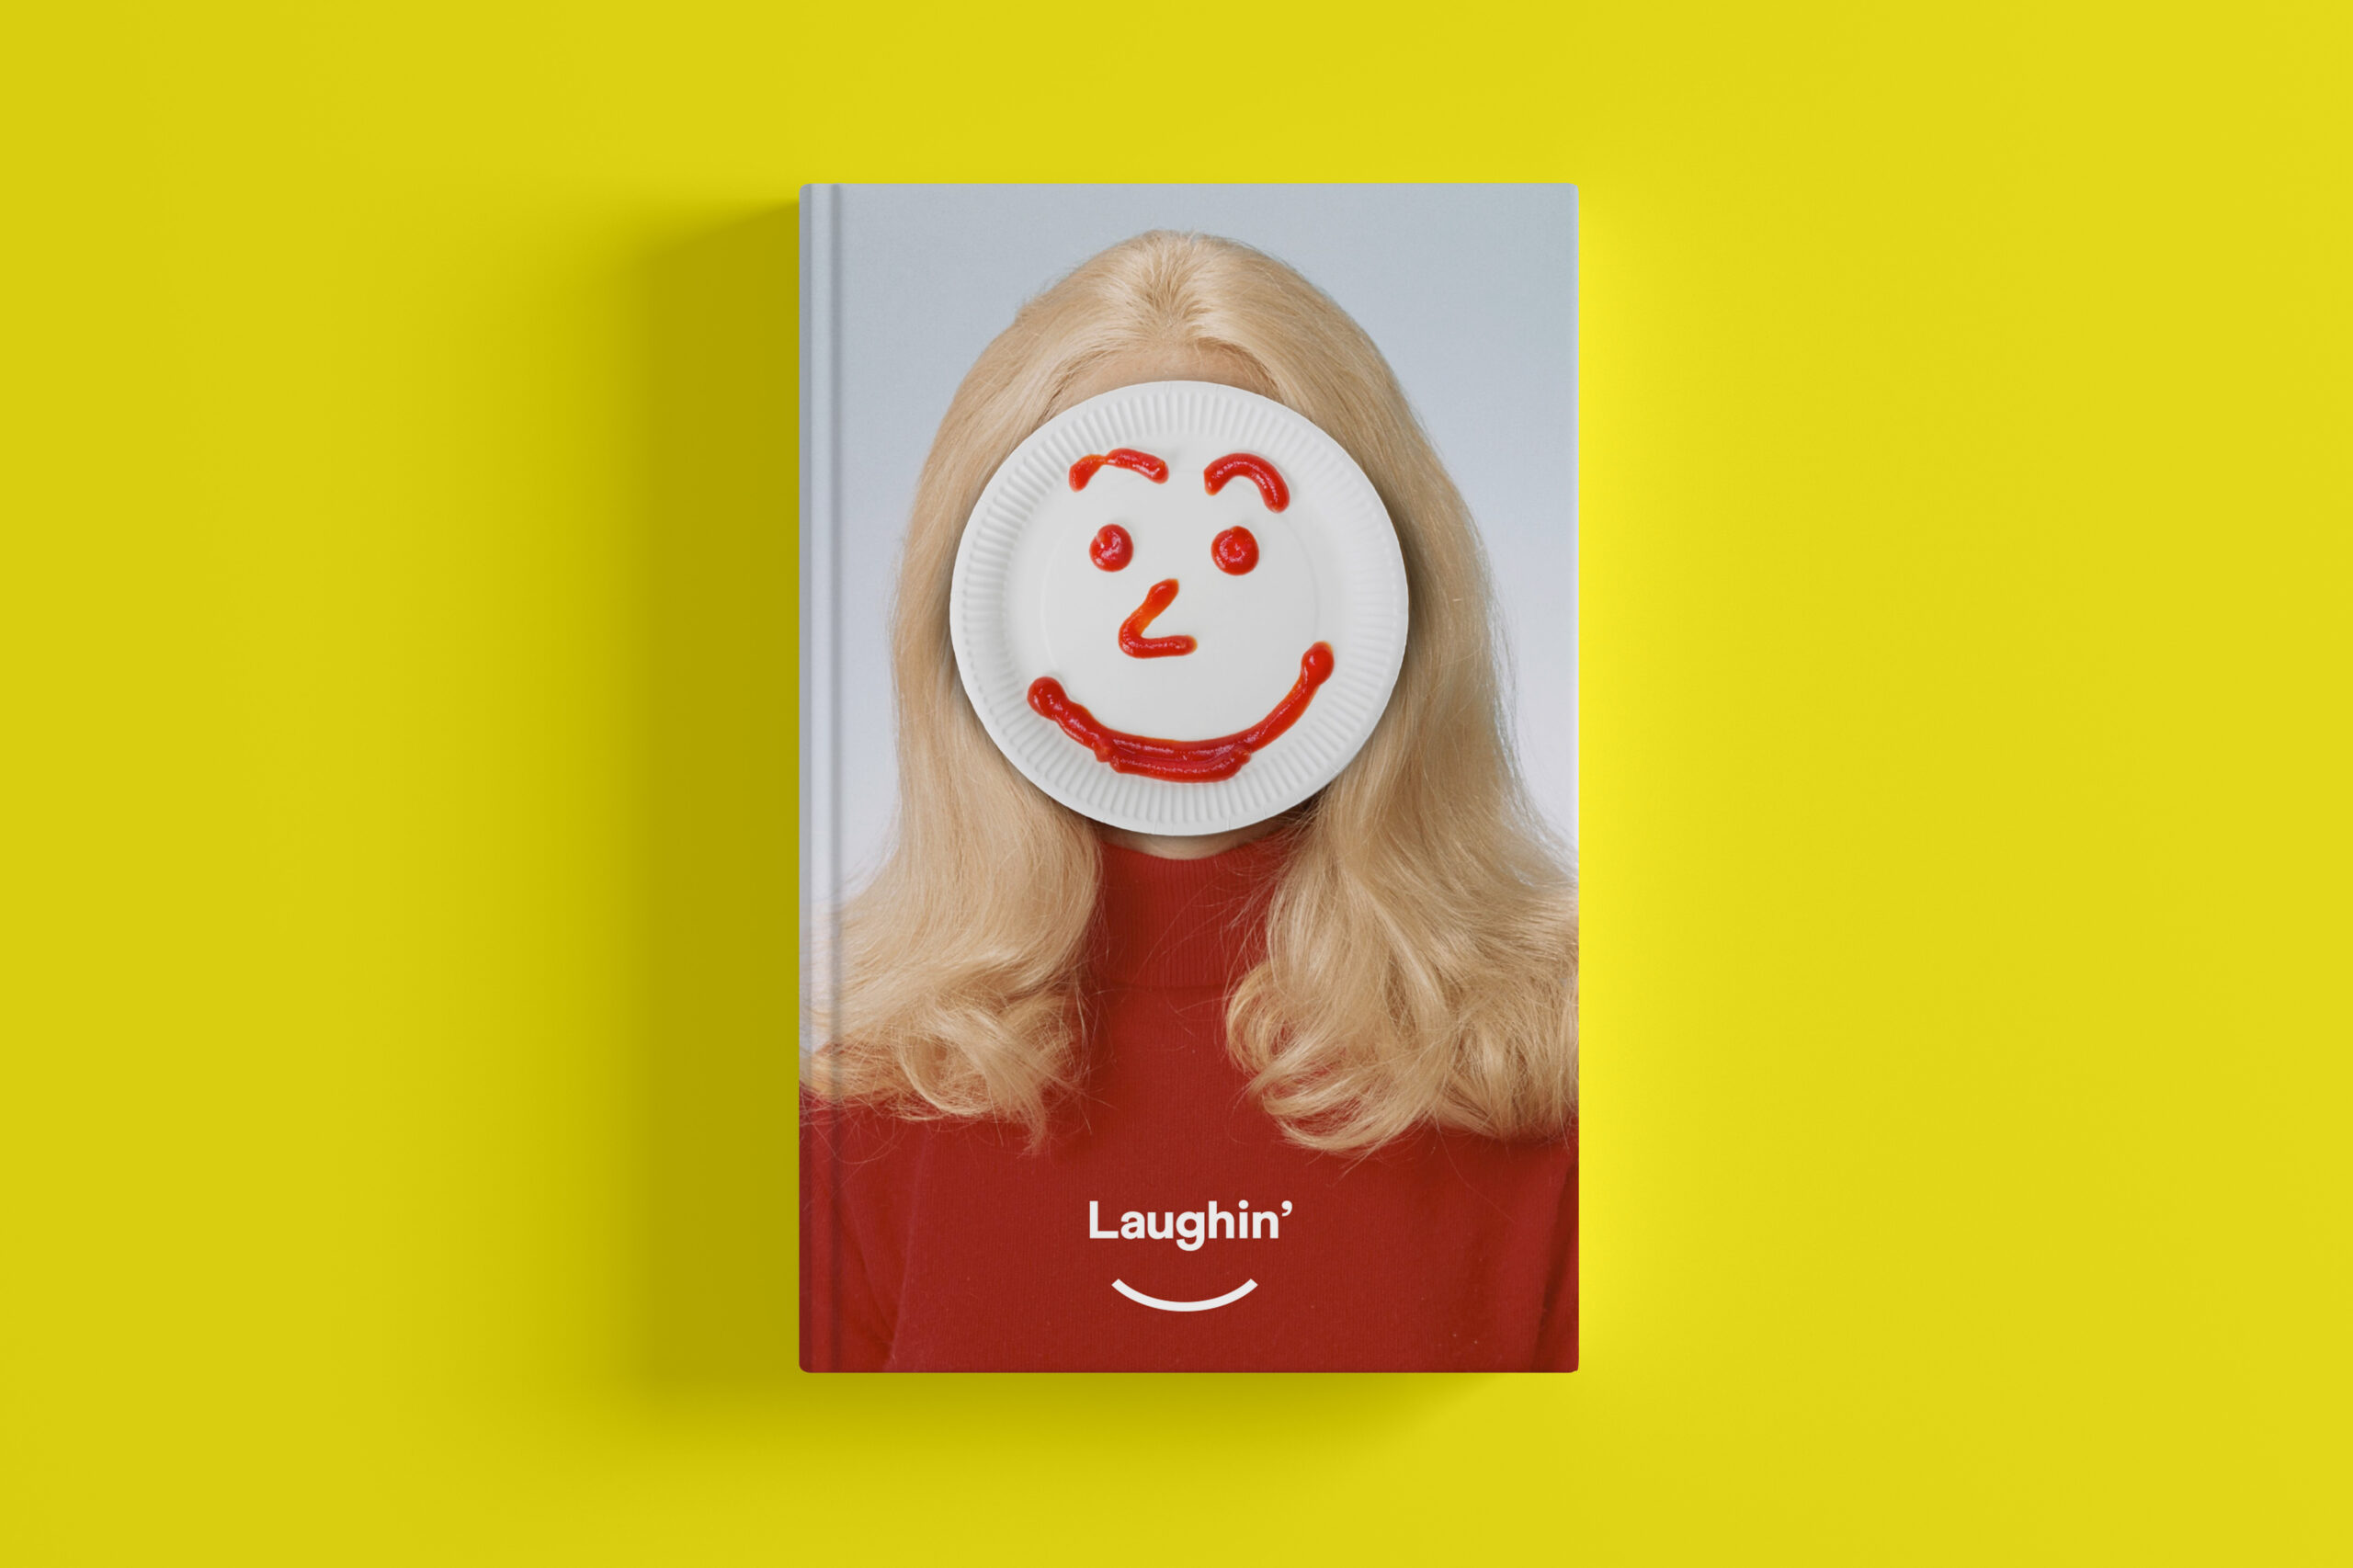 Laughin’ Exhibition